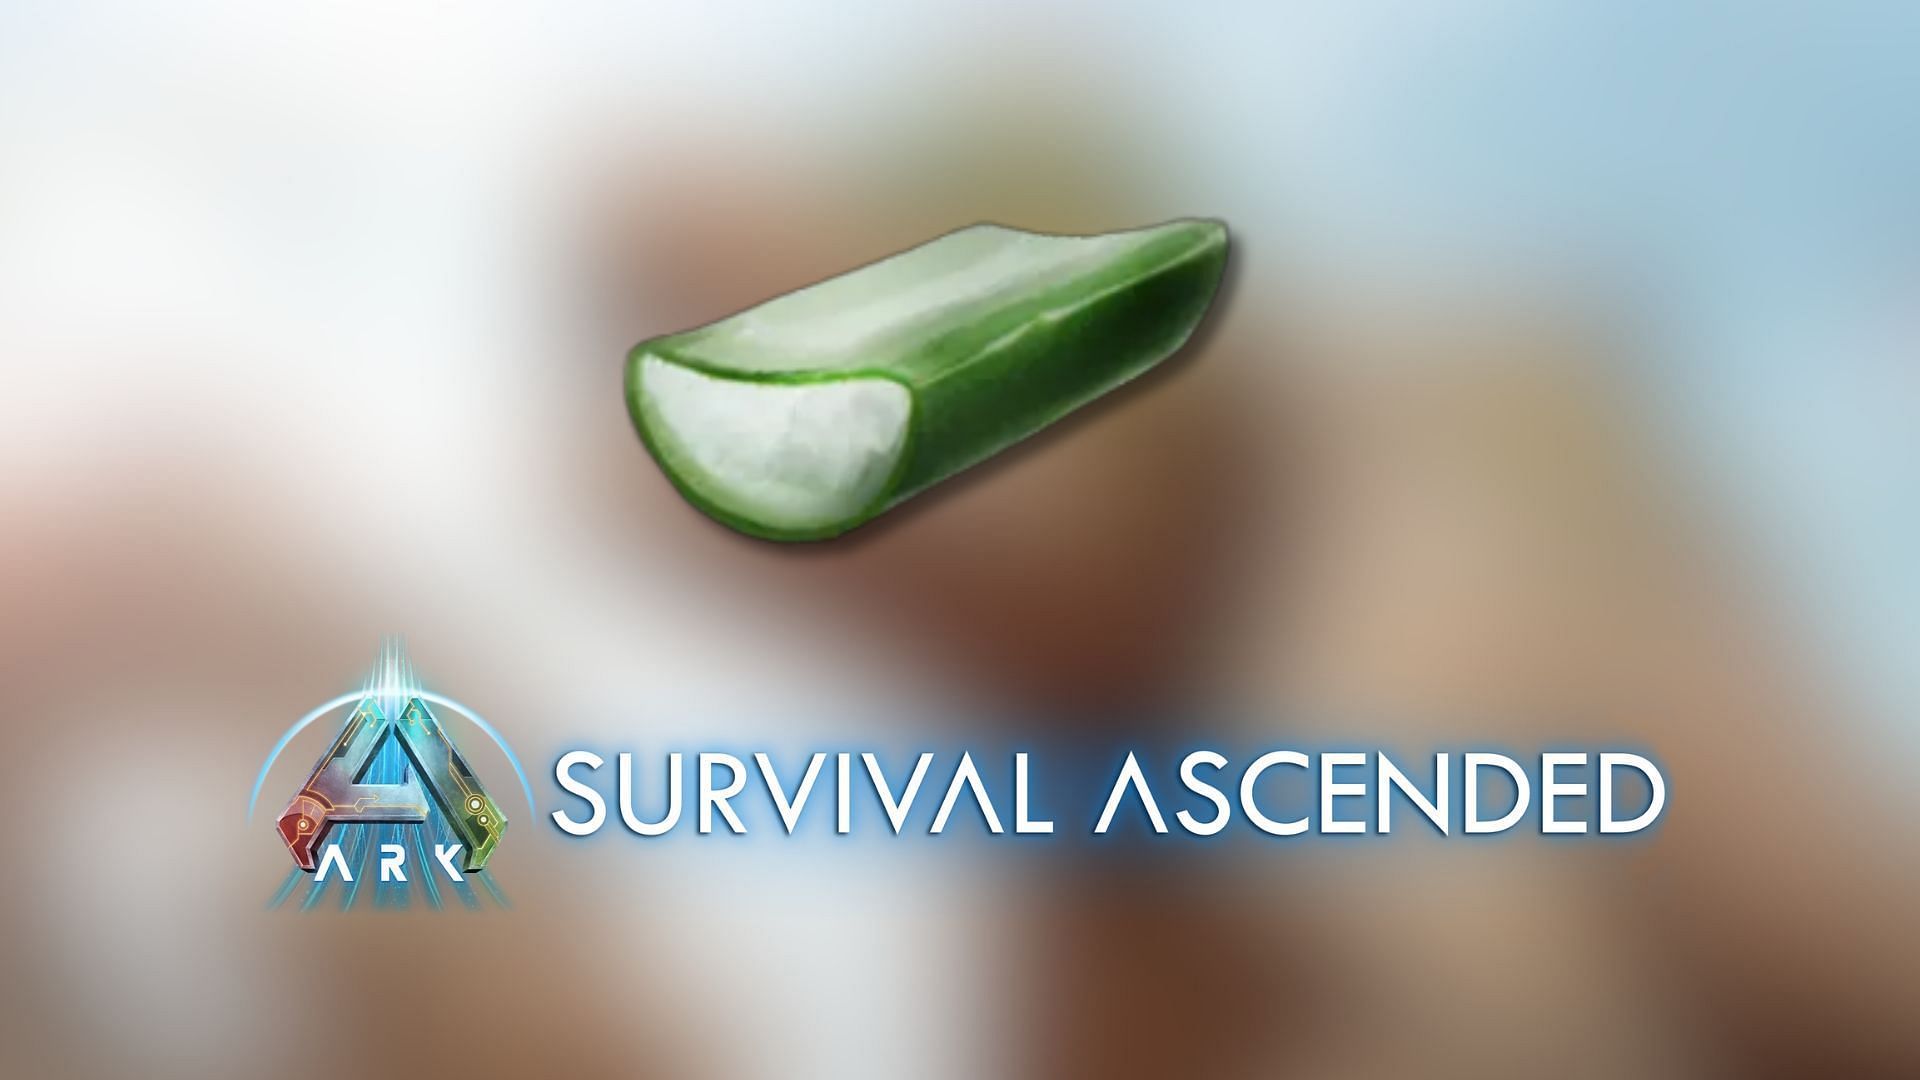 cactus sap in Ark Survival Ascended 